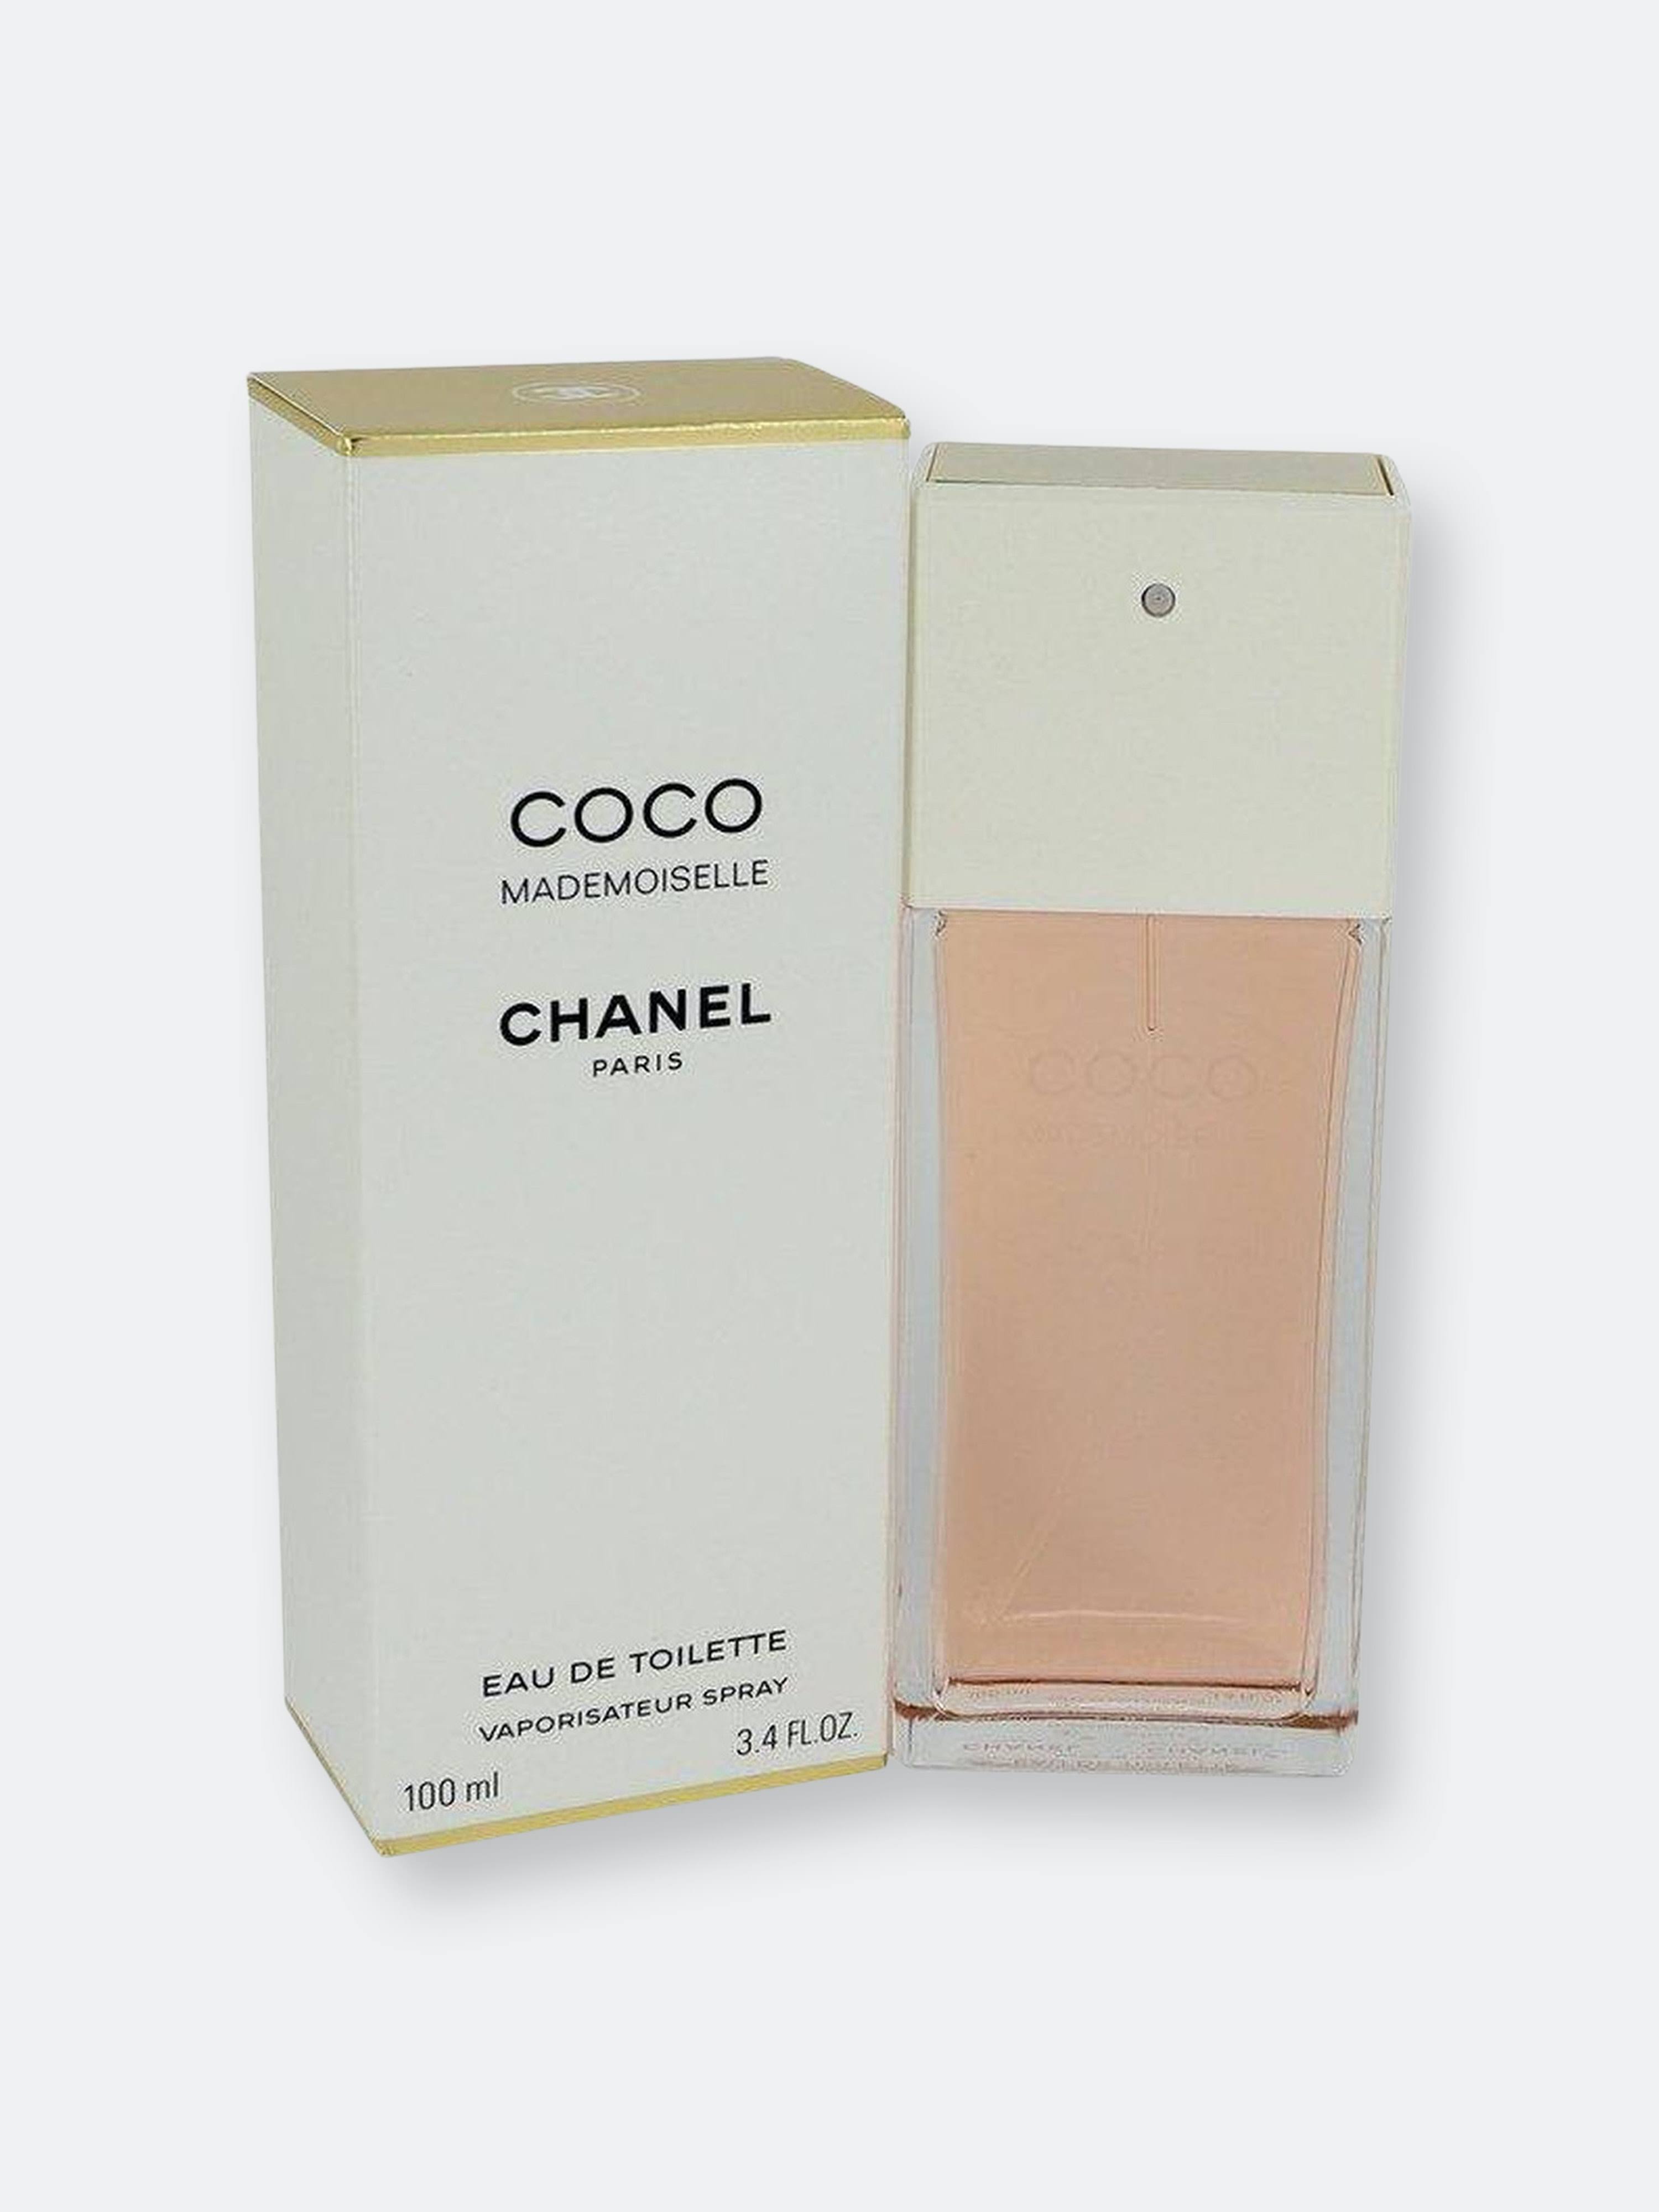 Chanel Coco Mademoiselle - 100ml Eau de Toilette Spray